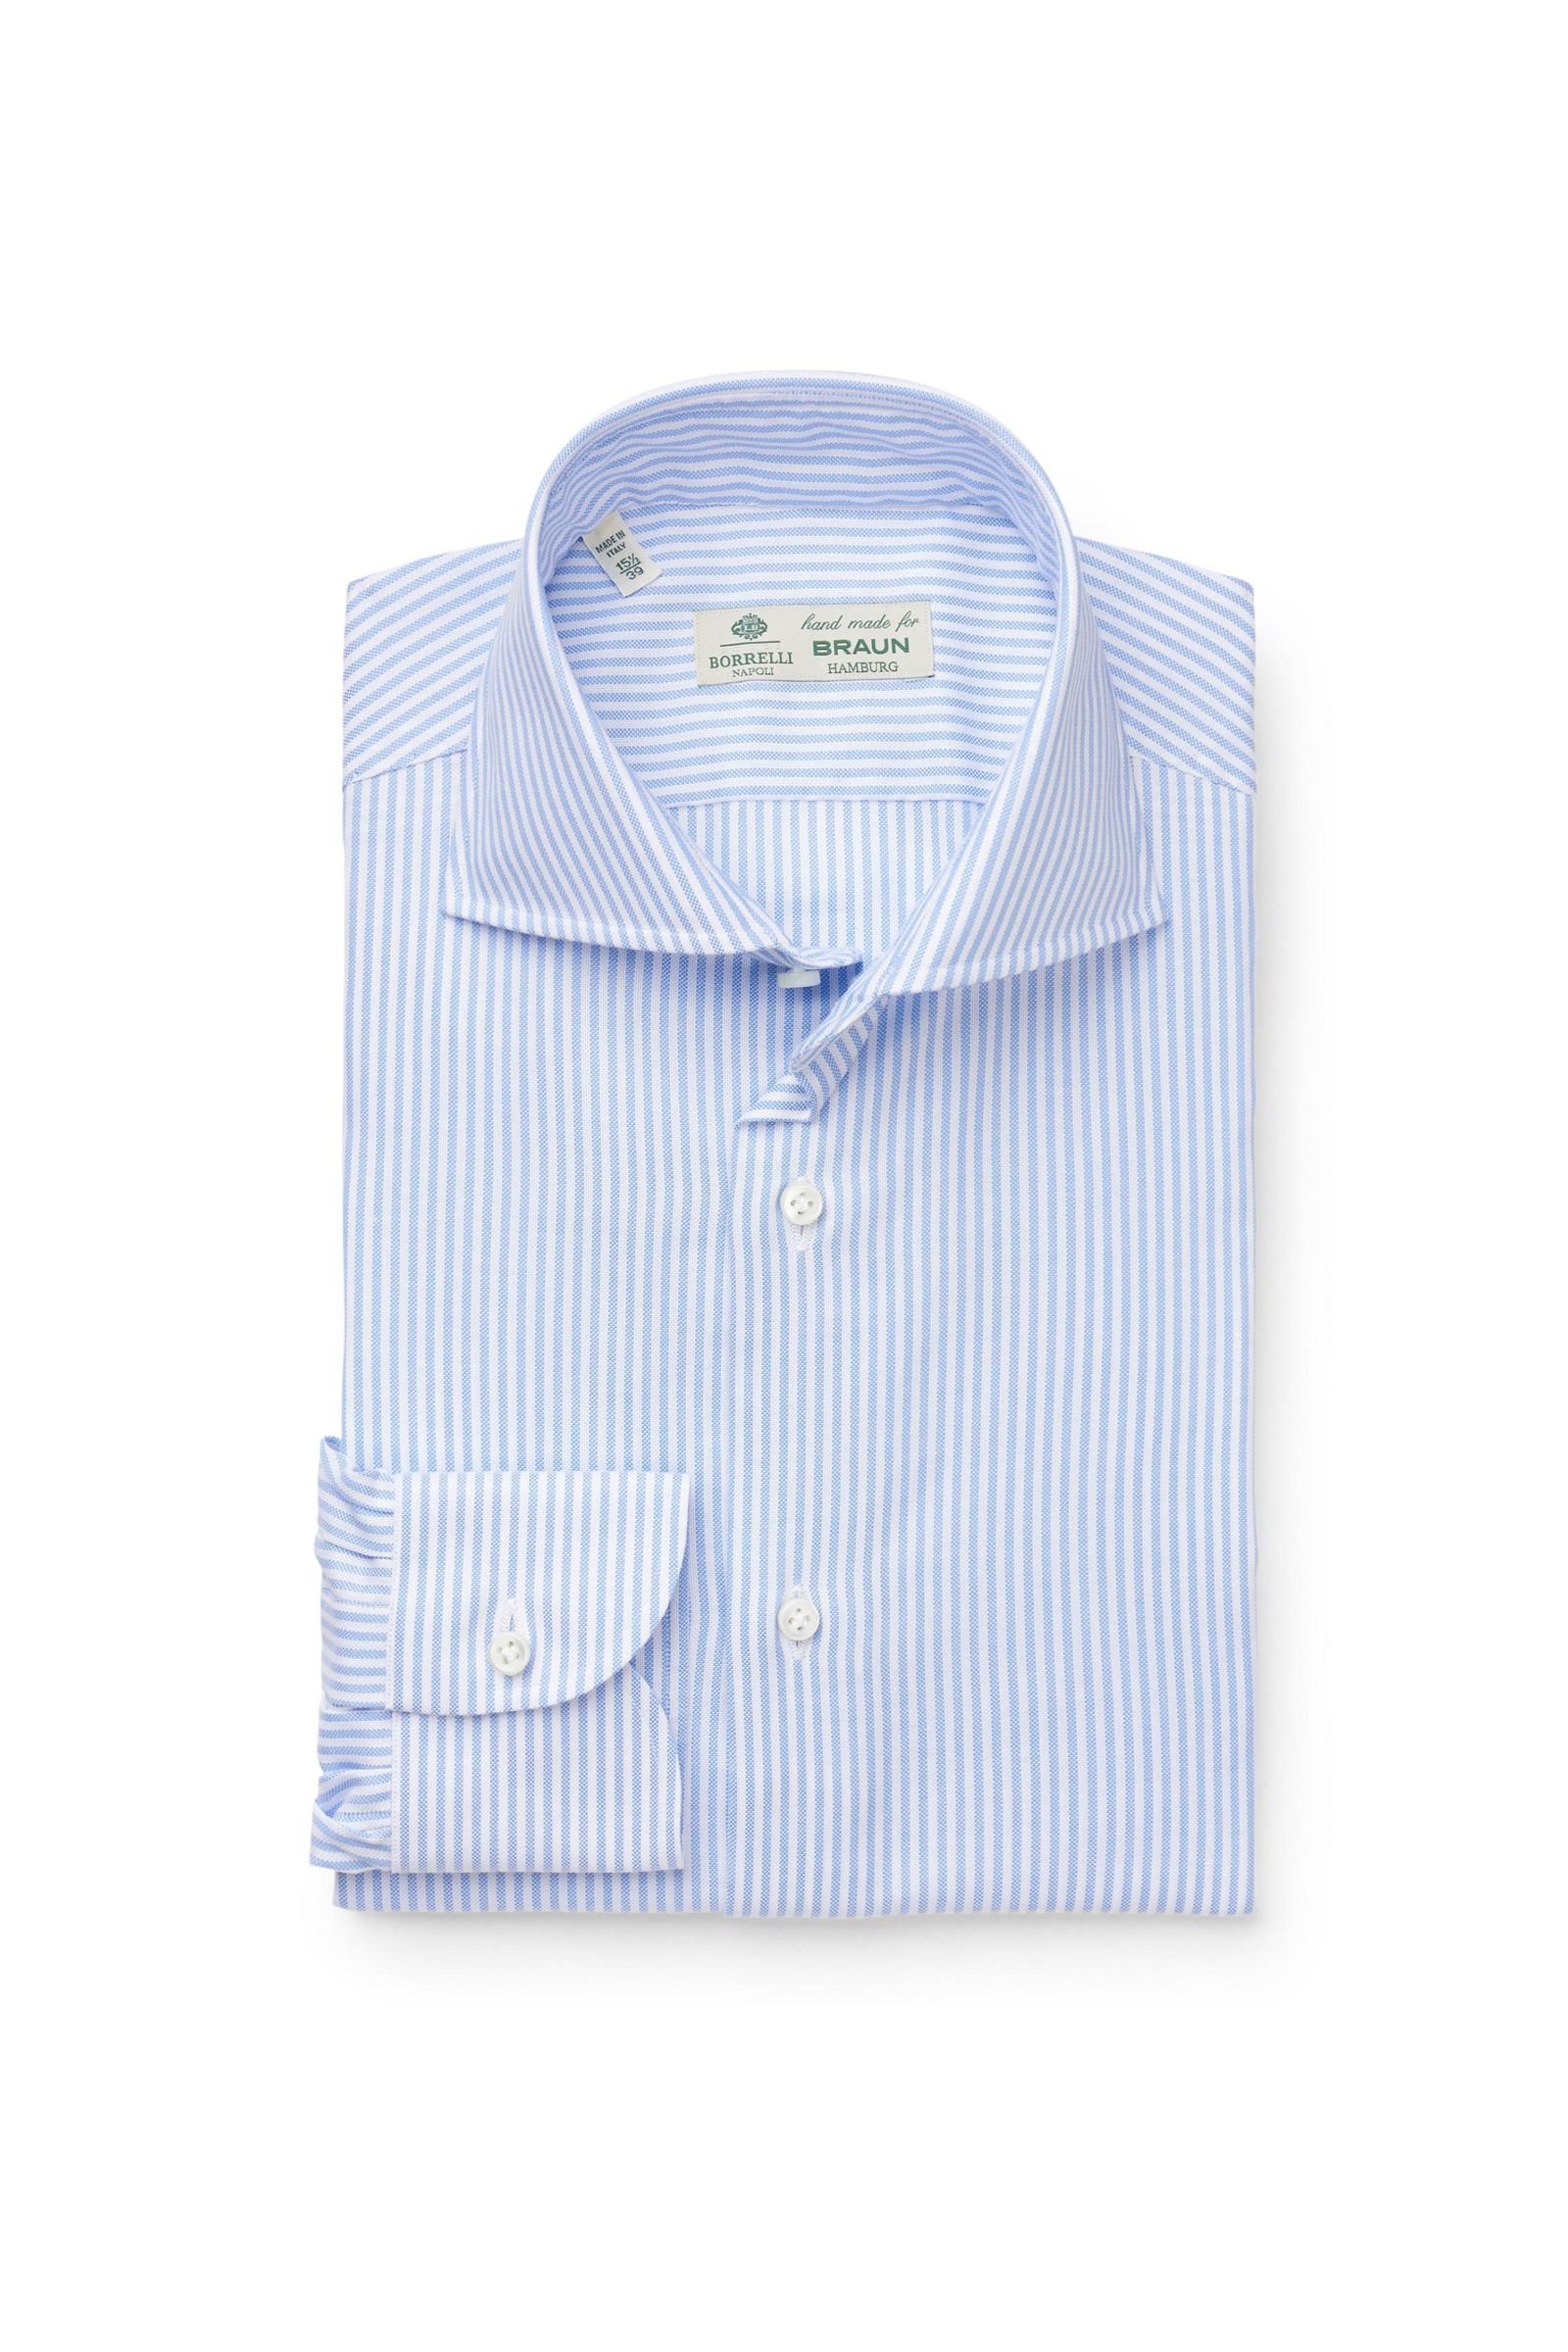 Business shirt 'Nando' shark collar light blue/white striped